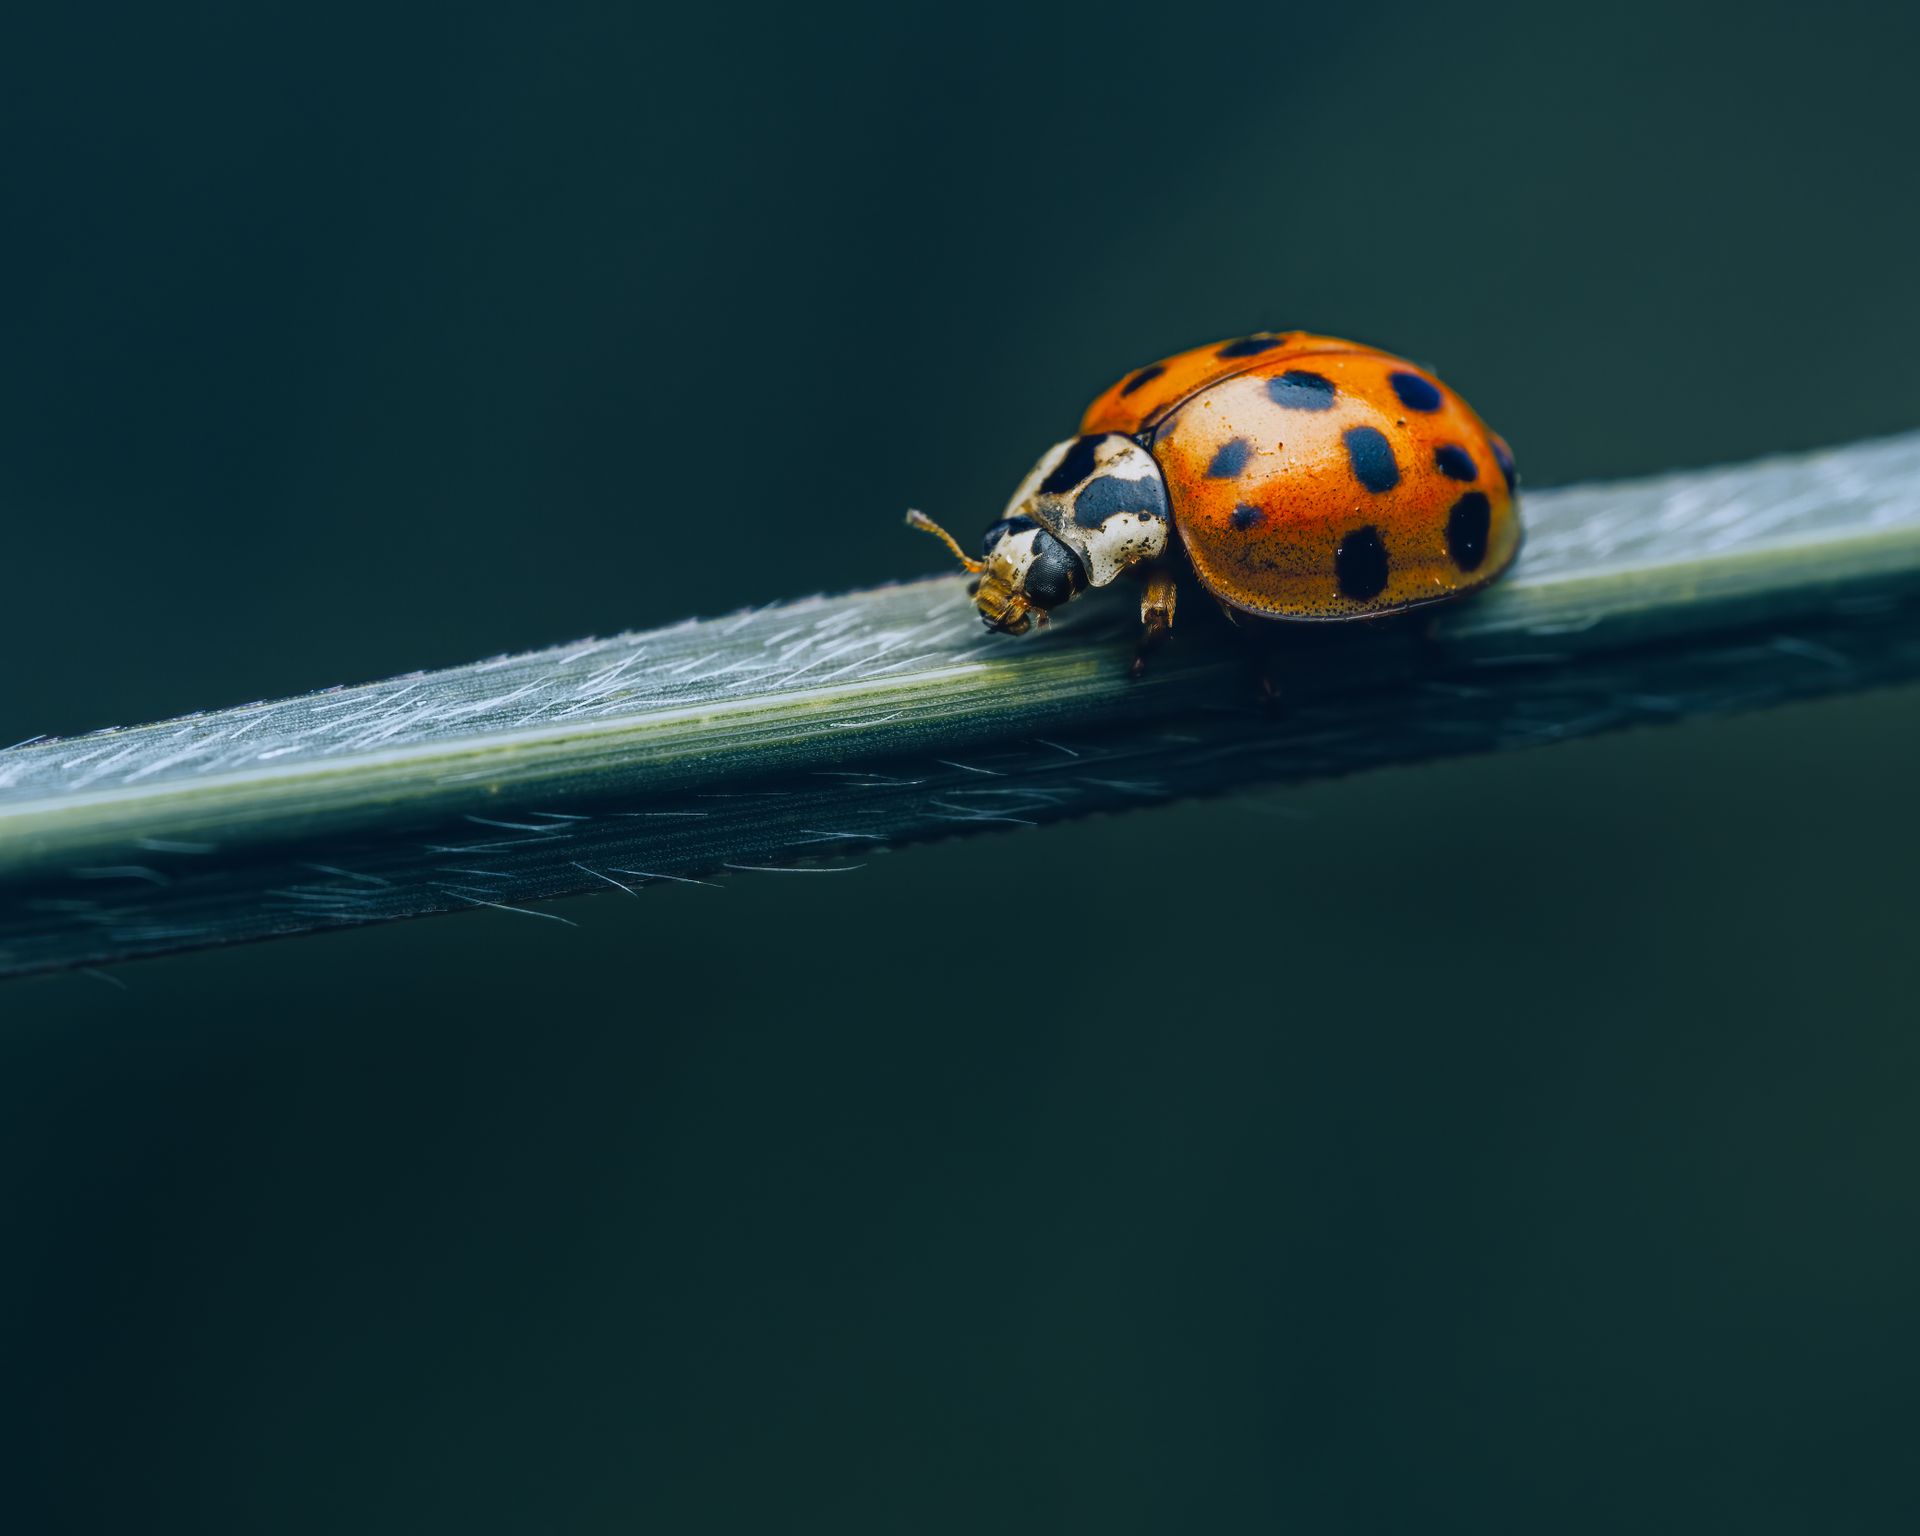 A ladybug is sitting on a leaf on a stick.